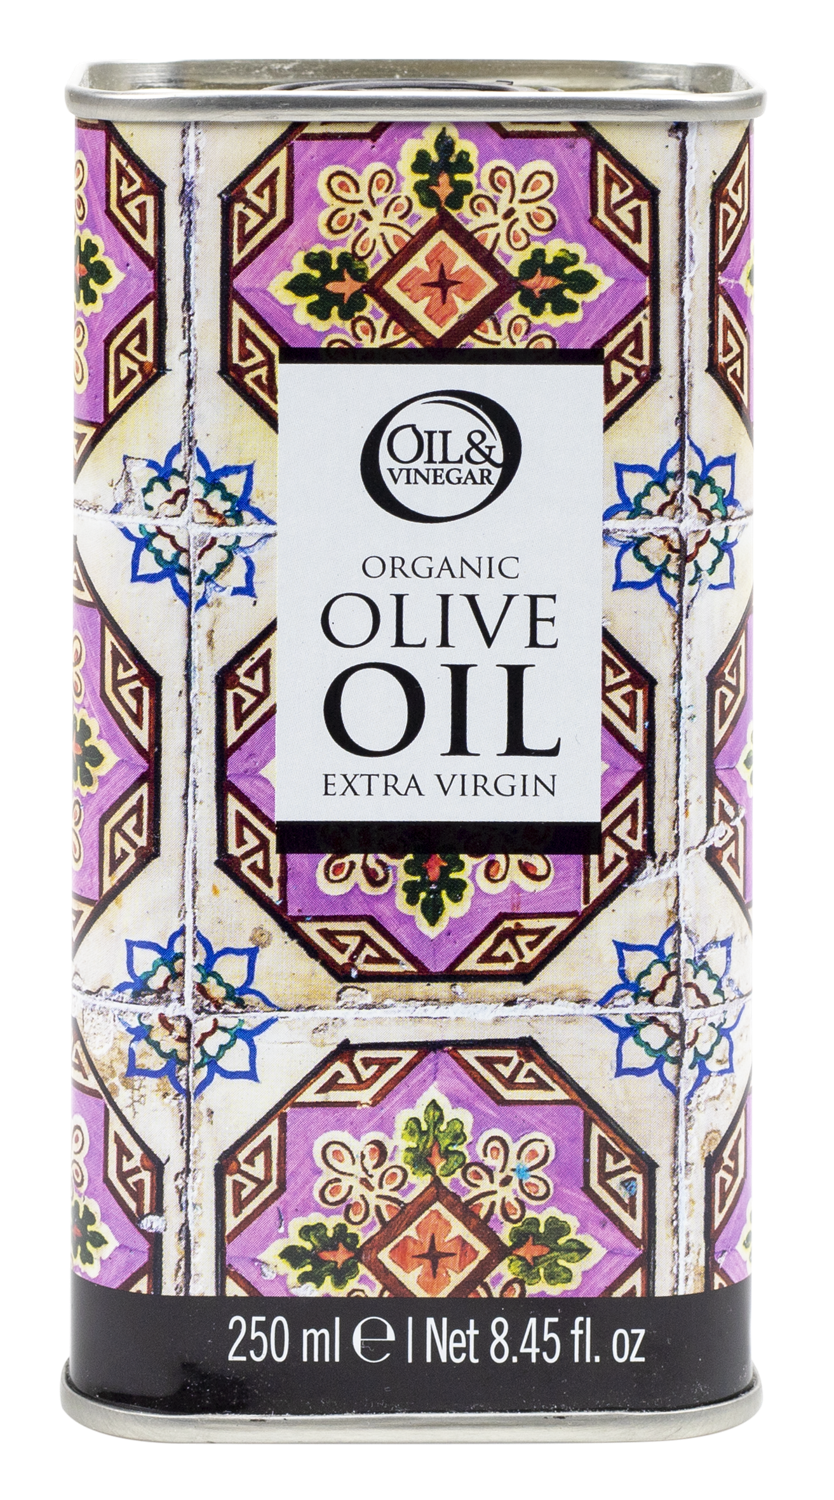 Biologische SpHuile d'olive extra vierge biologique en boîte design rose (250ml) - €9.95aanse extra vierge olijfolie in designblik (roze) - € 9,95